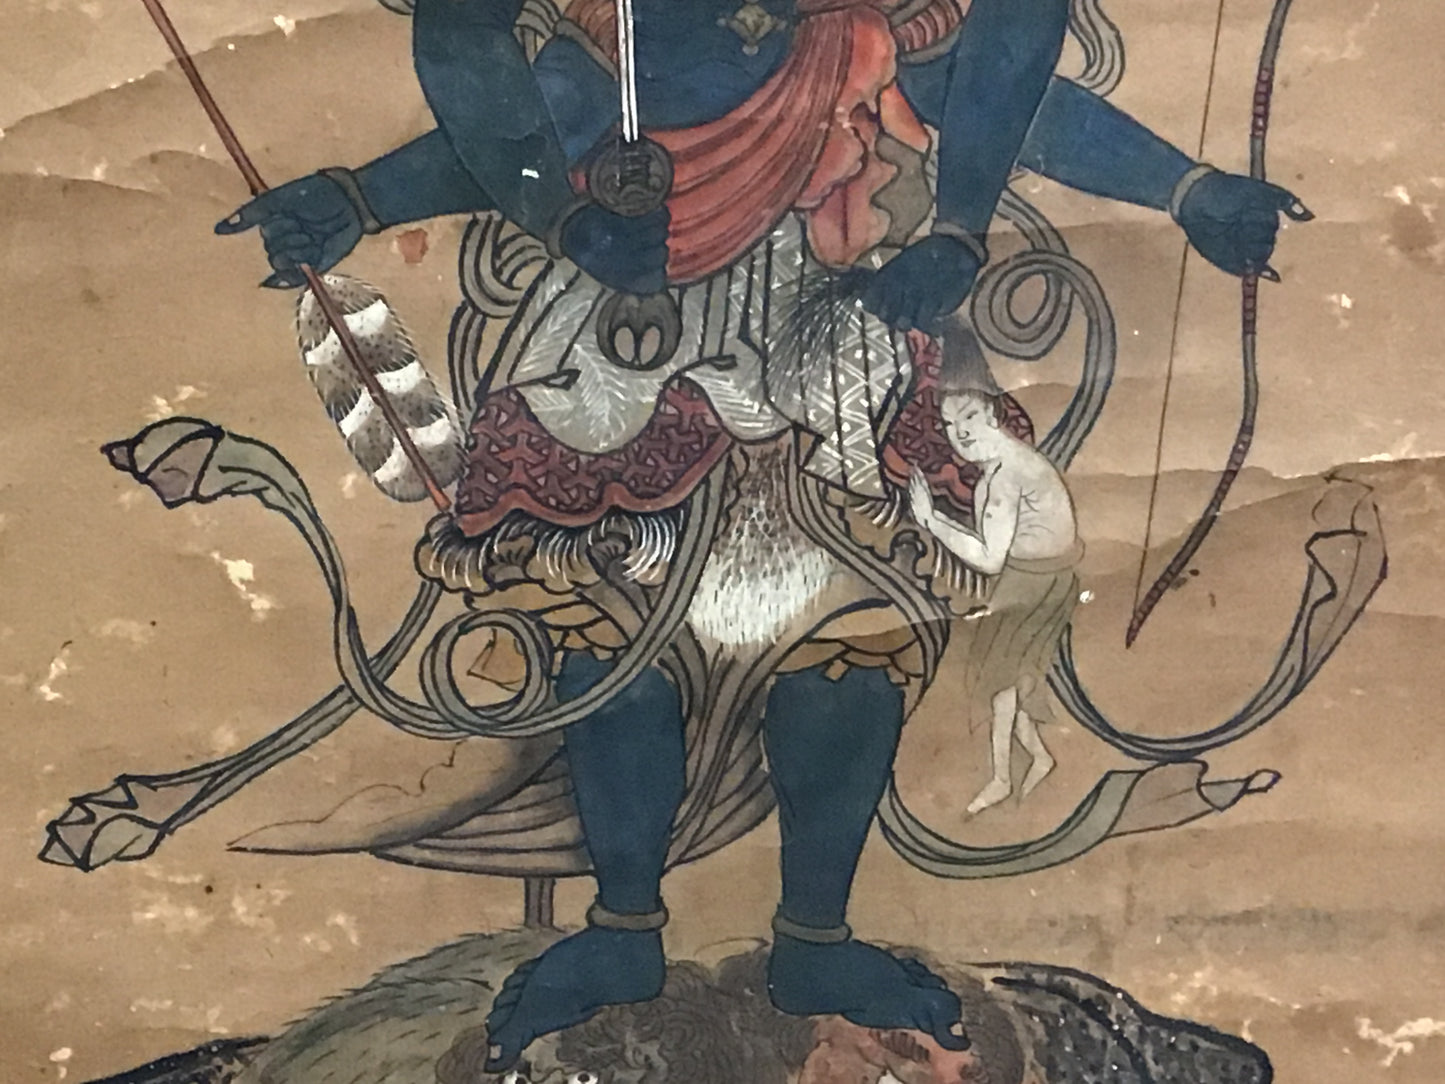 Y2179 KAKEJIKU Buddhist picture signed 144x39cm Japanese hanging scroll interior